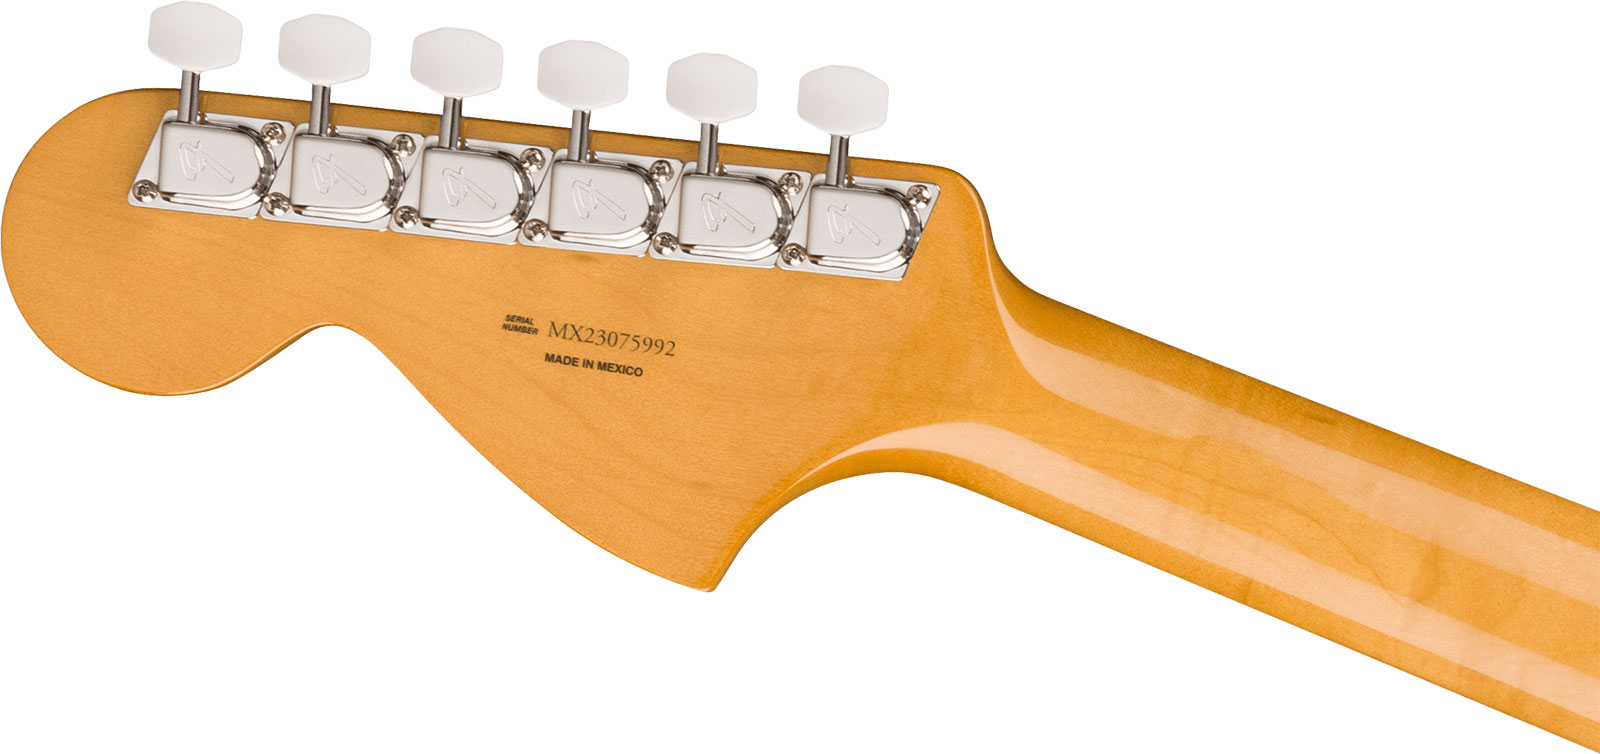 Fender Mustang 70s Competition Vintera 2 Mex 2s Trem Rw - Competition Orange - Retro-rock elektrische gitaar - Variation 3